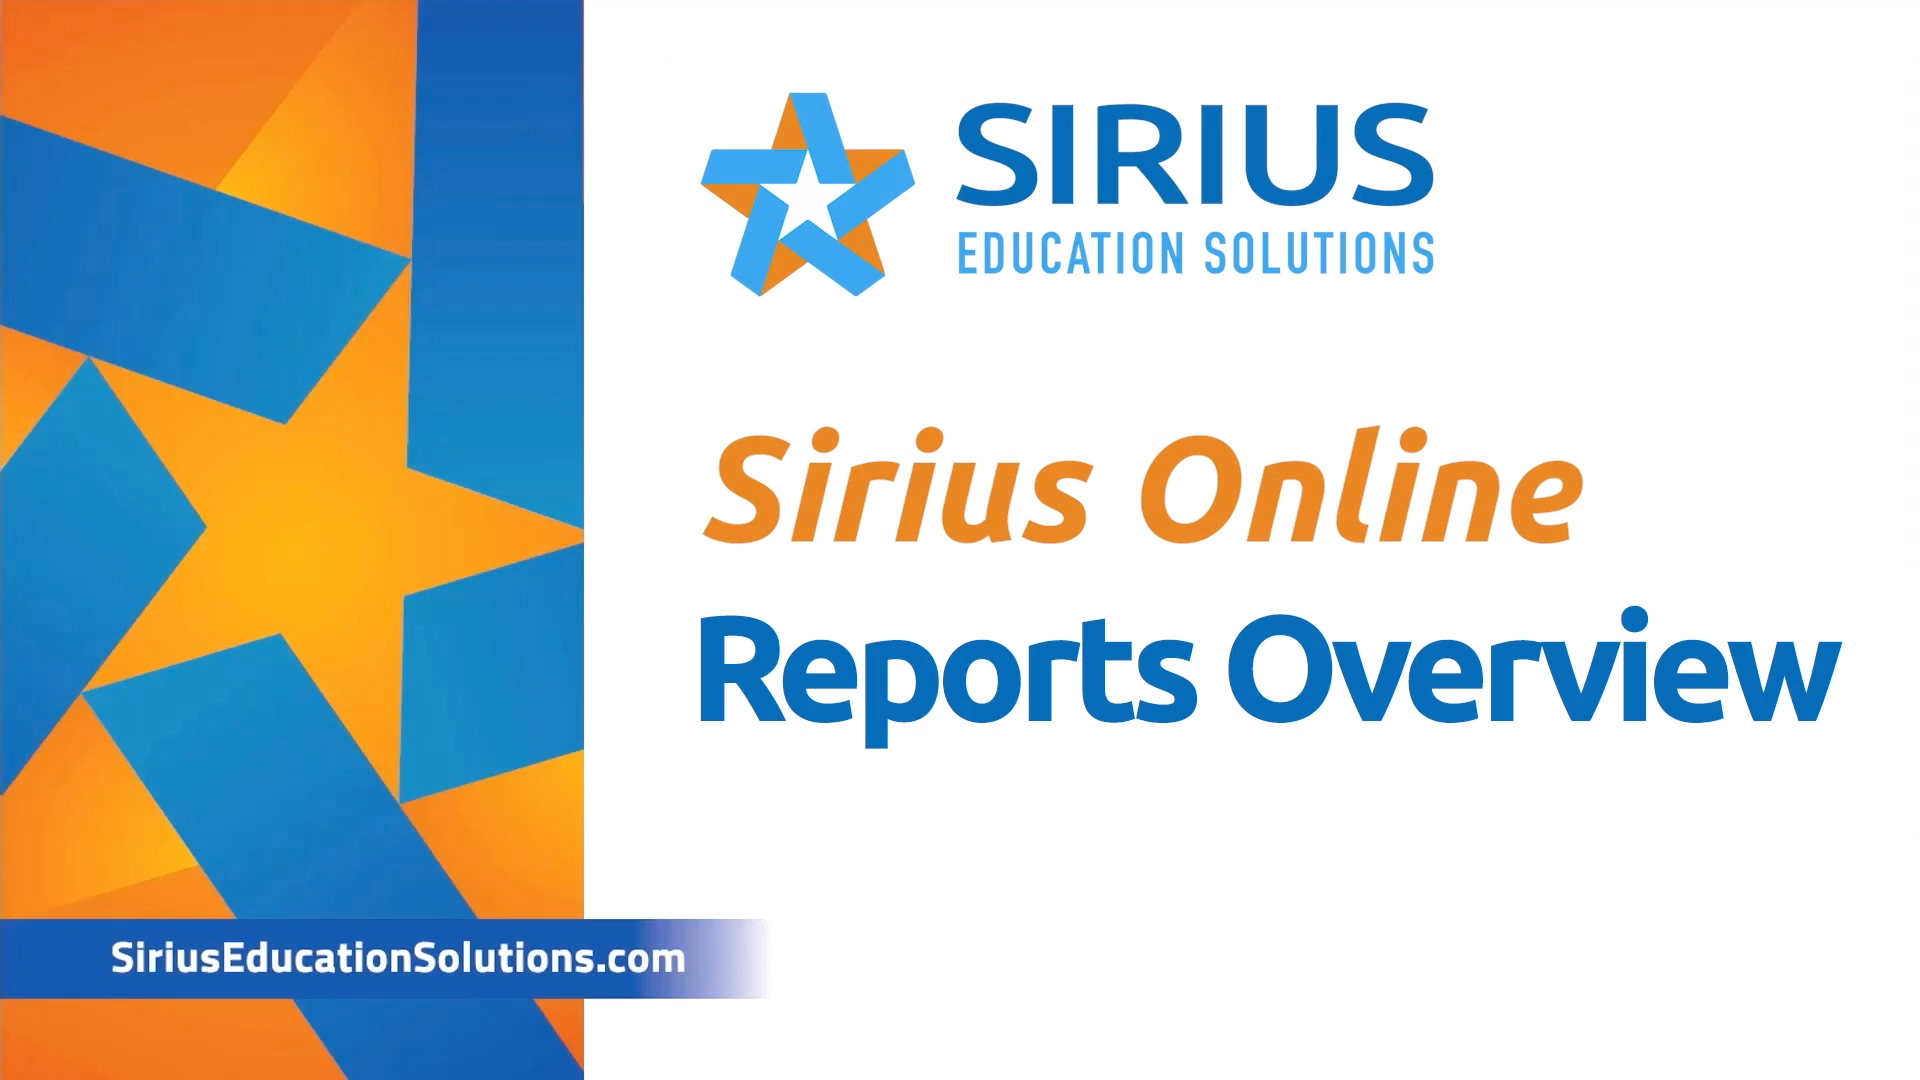 still from Sirius Education Solutions video